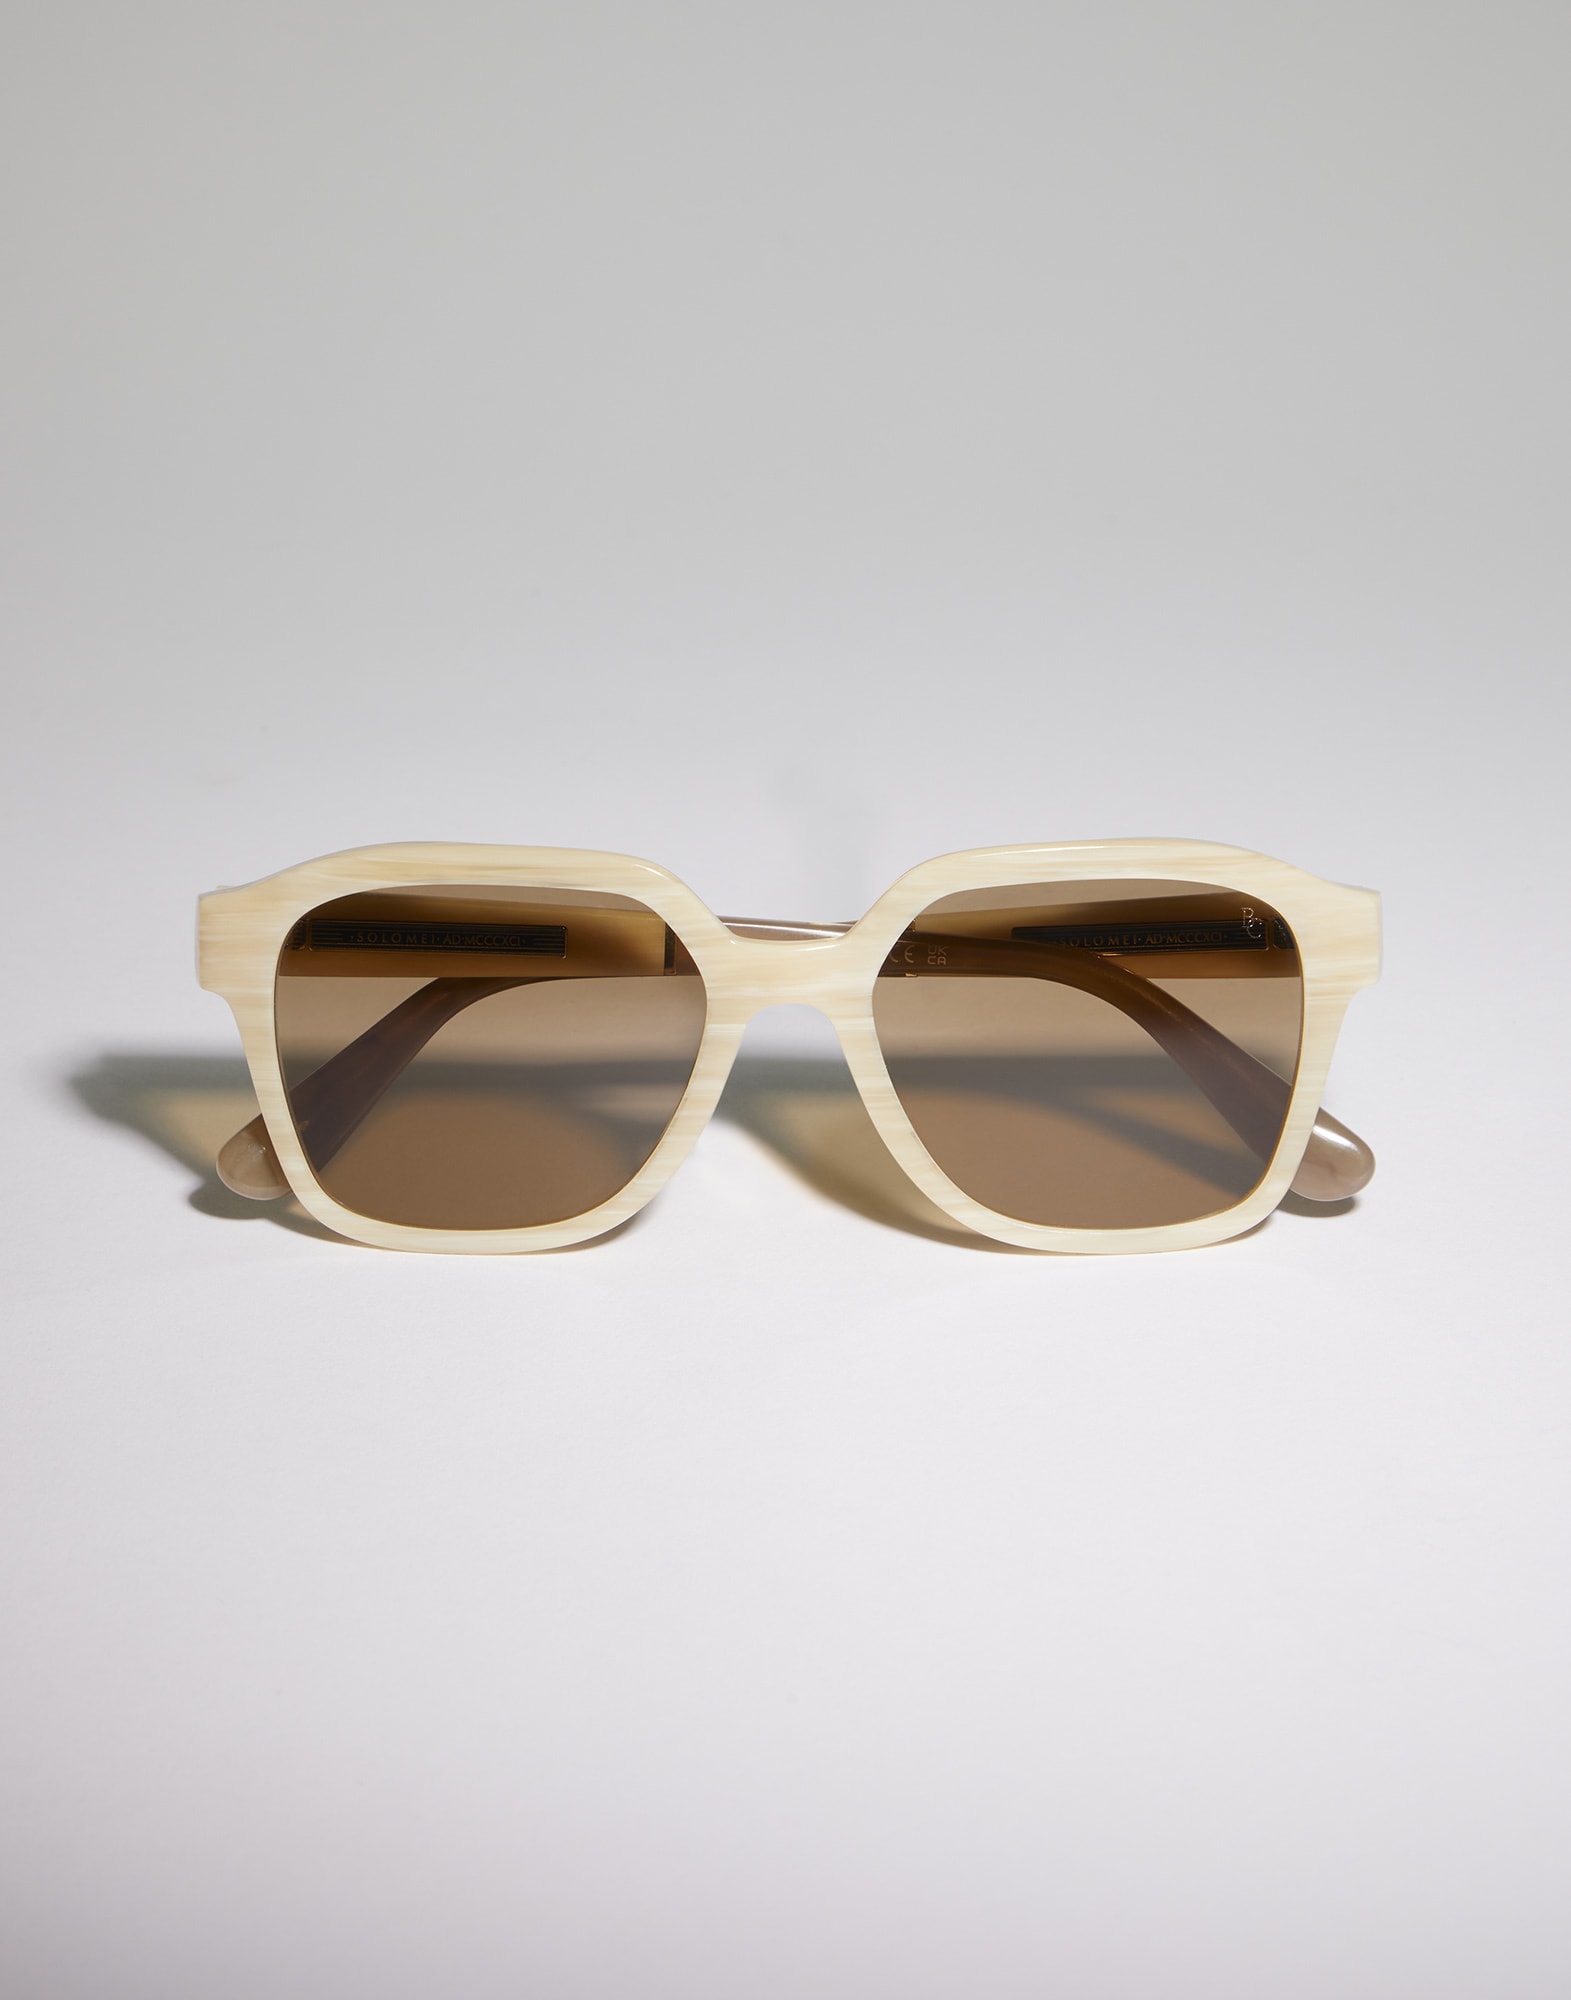 Geometric acetate sunglasses